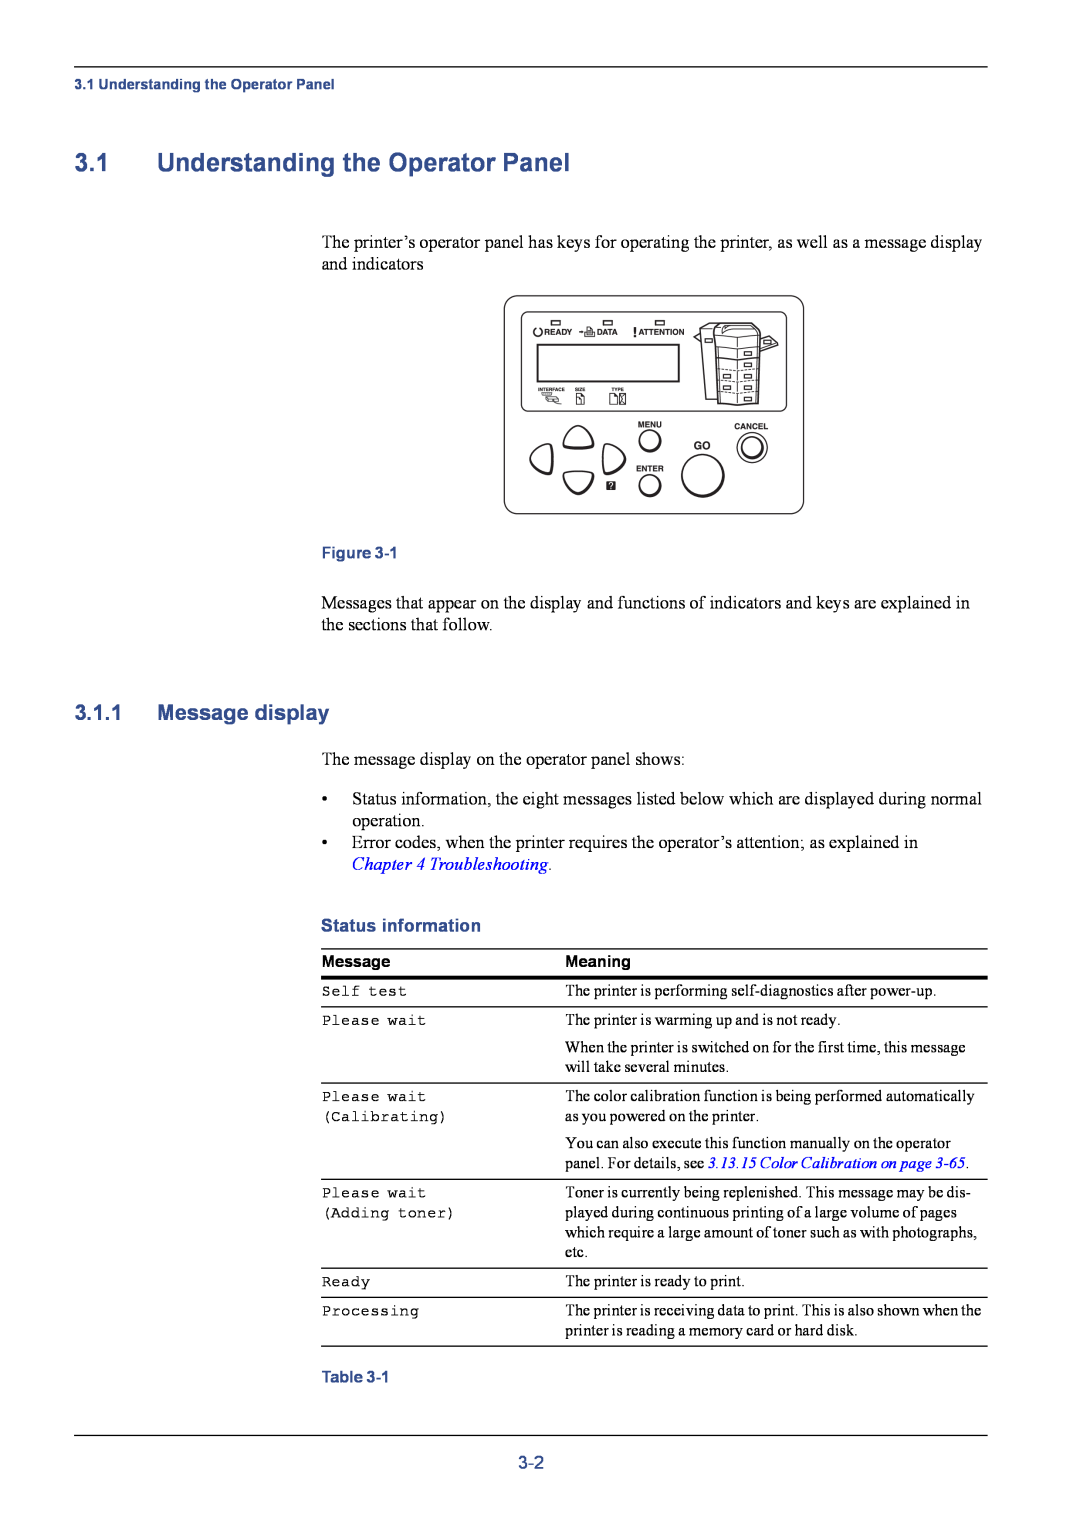 Kyocera C8026N manual Understanding the Operator Panel, Message display, Status information 